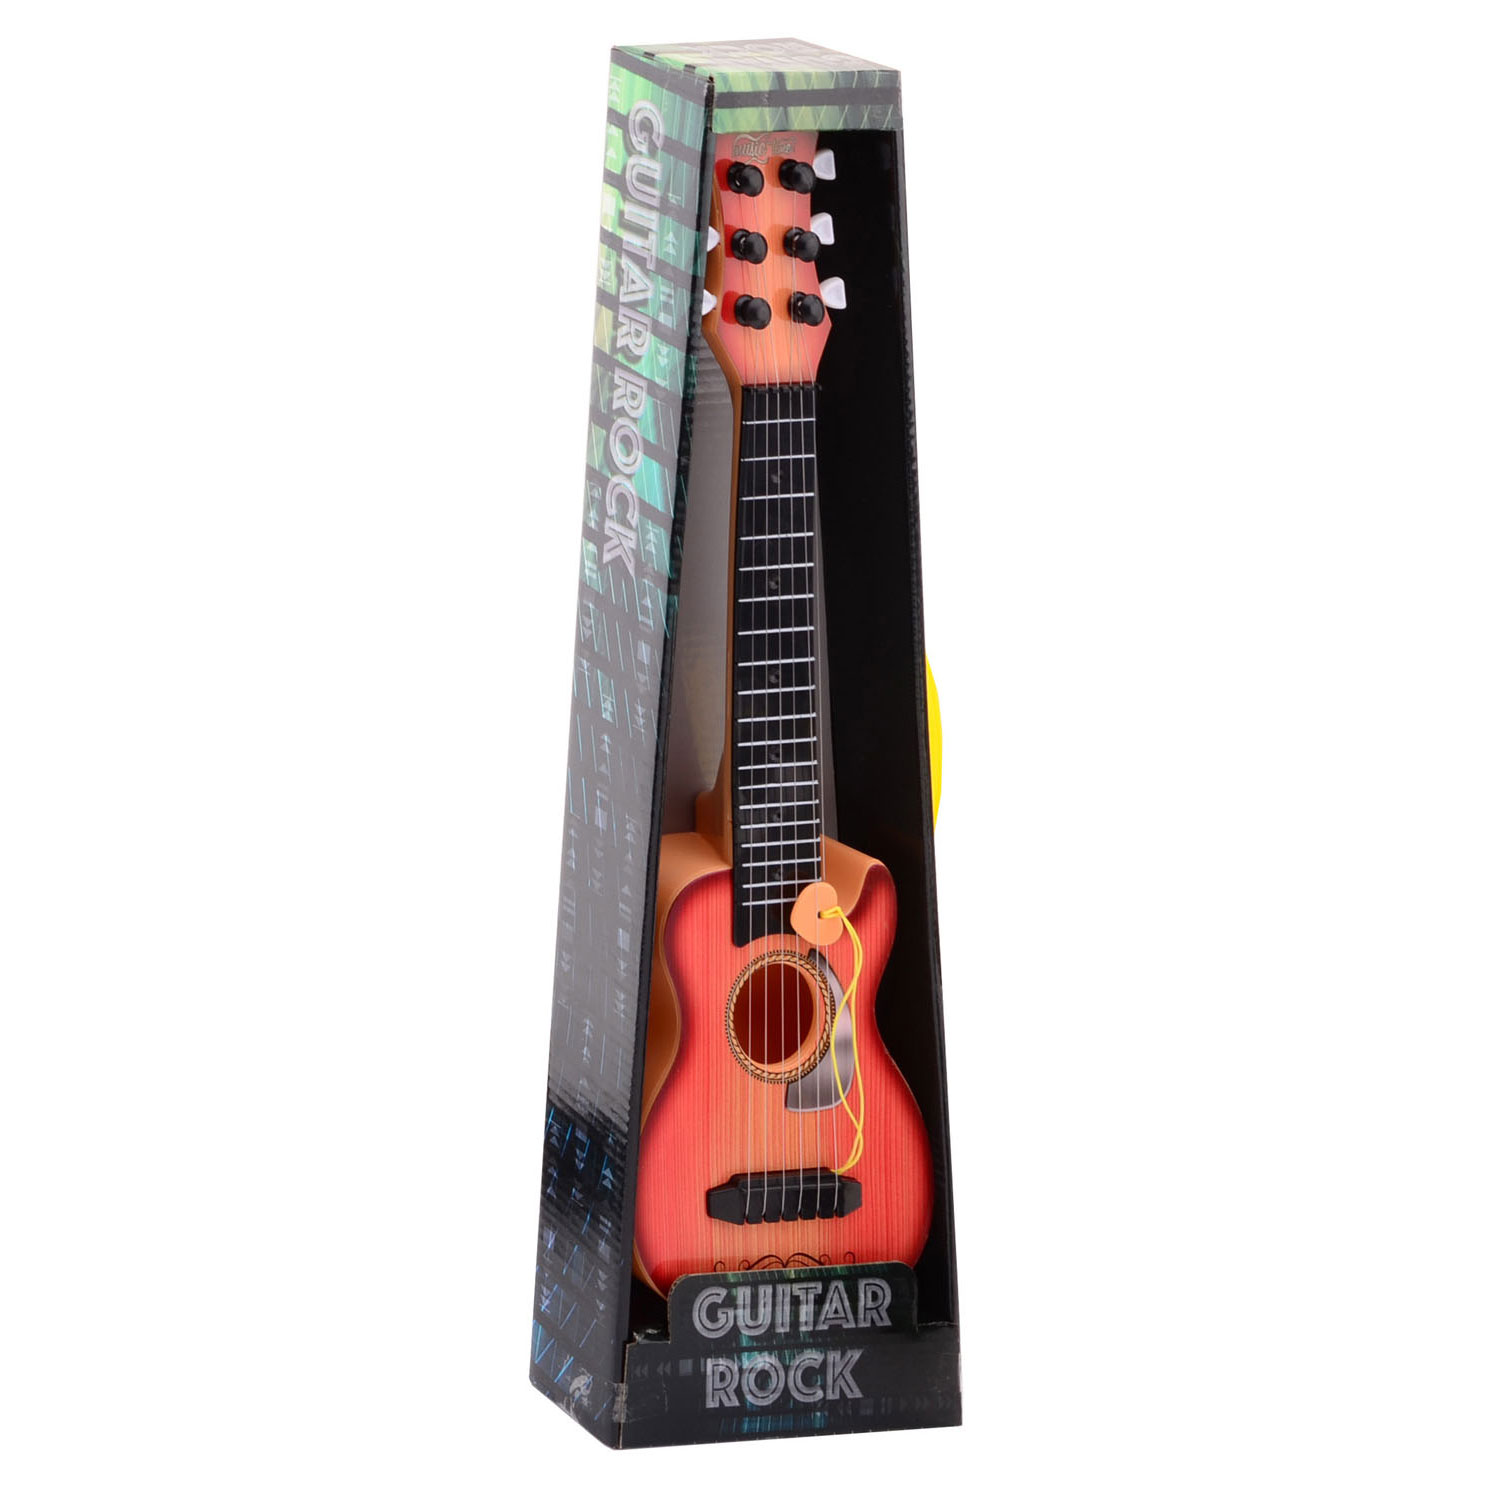 Gitarre mit Metallsaiten, 45 cm